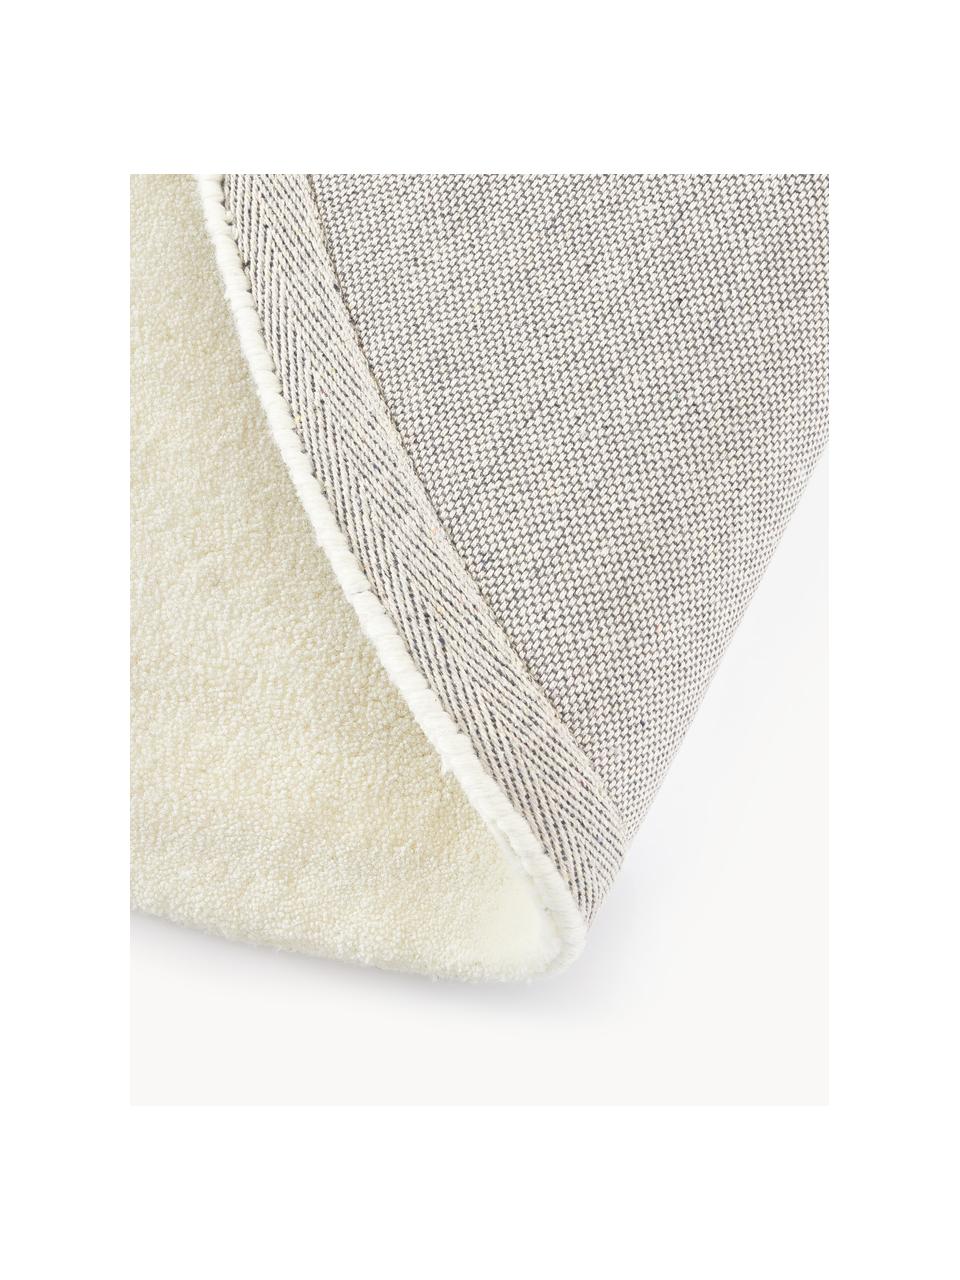 Alfombra redonda artesanal de lana Ezra, Parte superior: 100% lana con certificado, Reverso: 70% algodón, 30% poliéste, Blanco crema, Ø 250 cm (Tamaño XL)